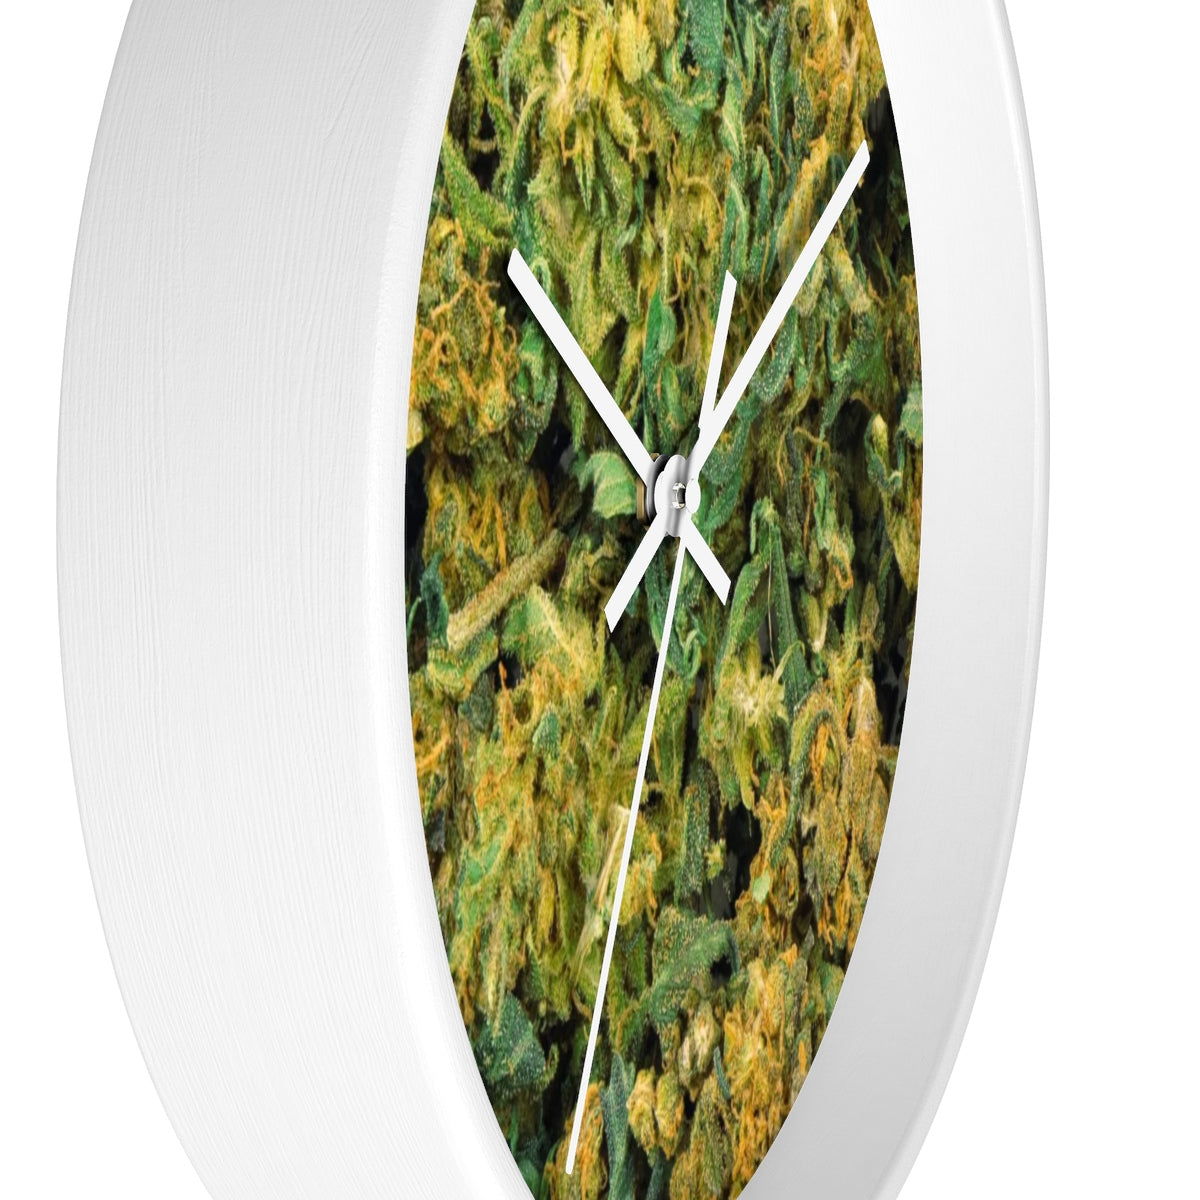 CannaNug Cannabis Wall clock